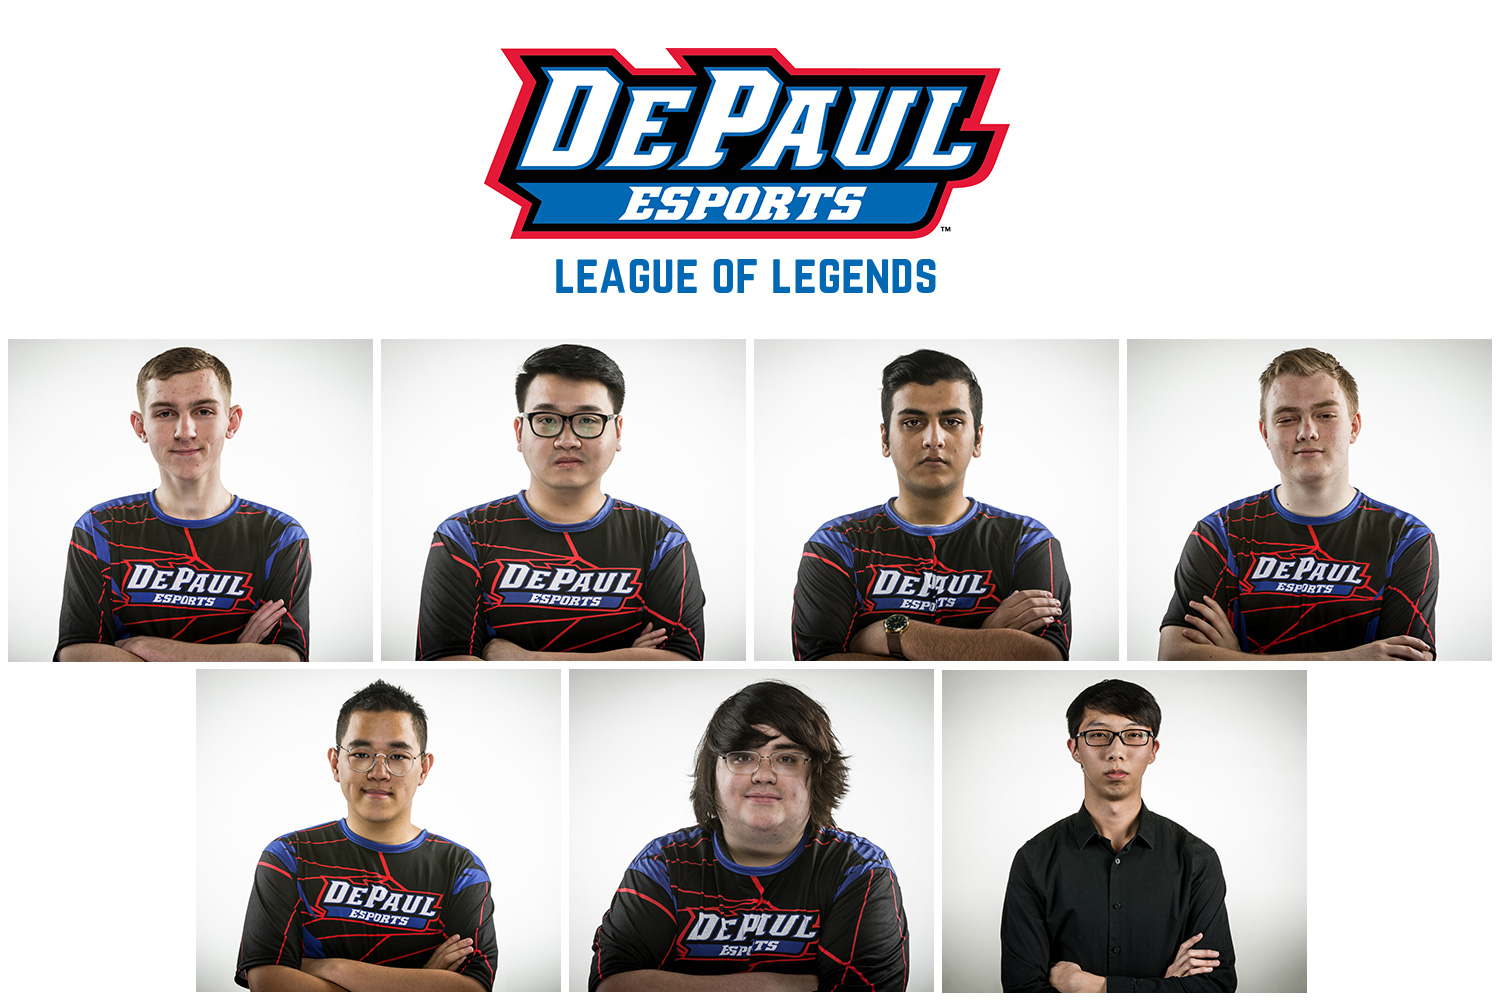 DePaul esports team competing in BIG EAST League of Legends spring season